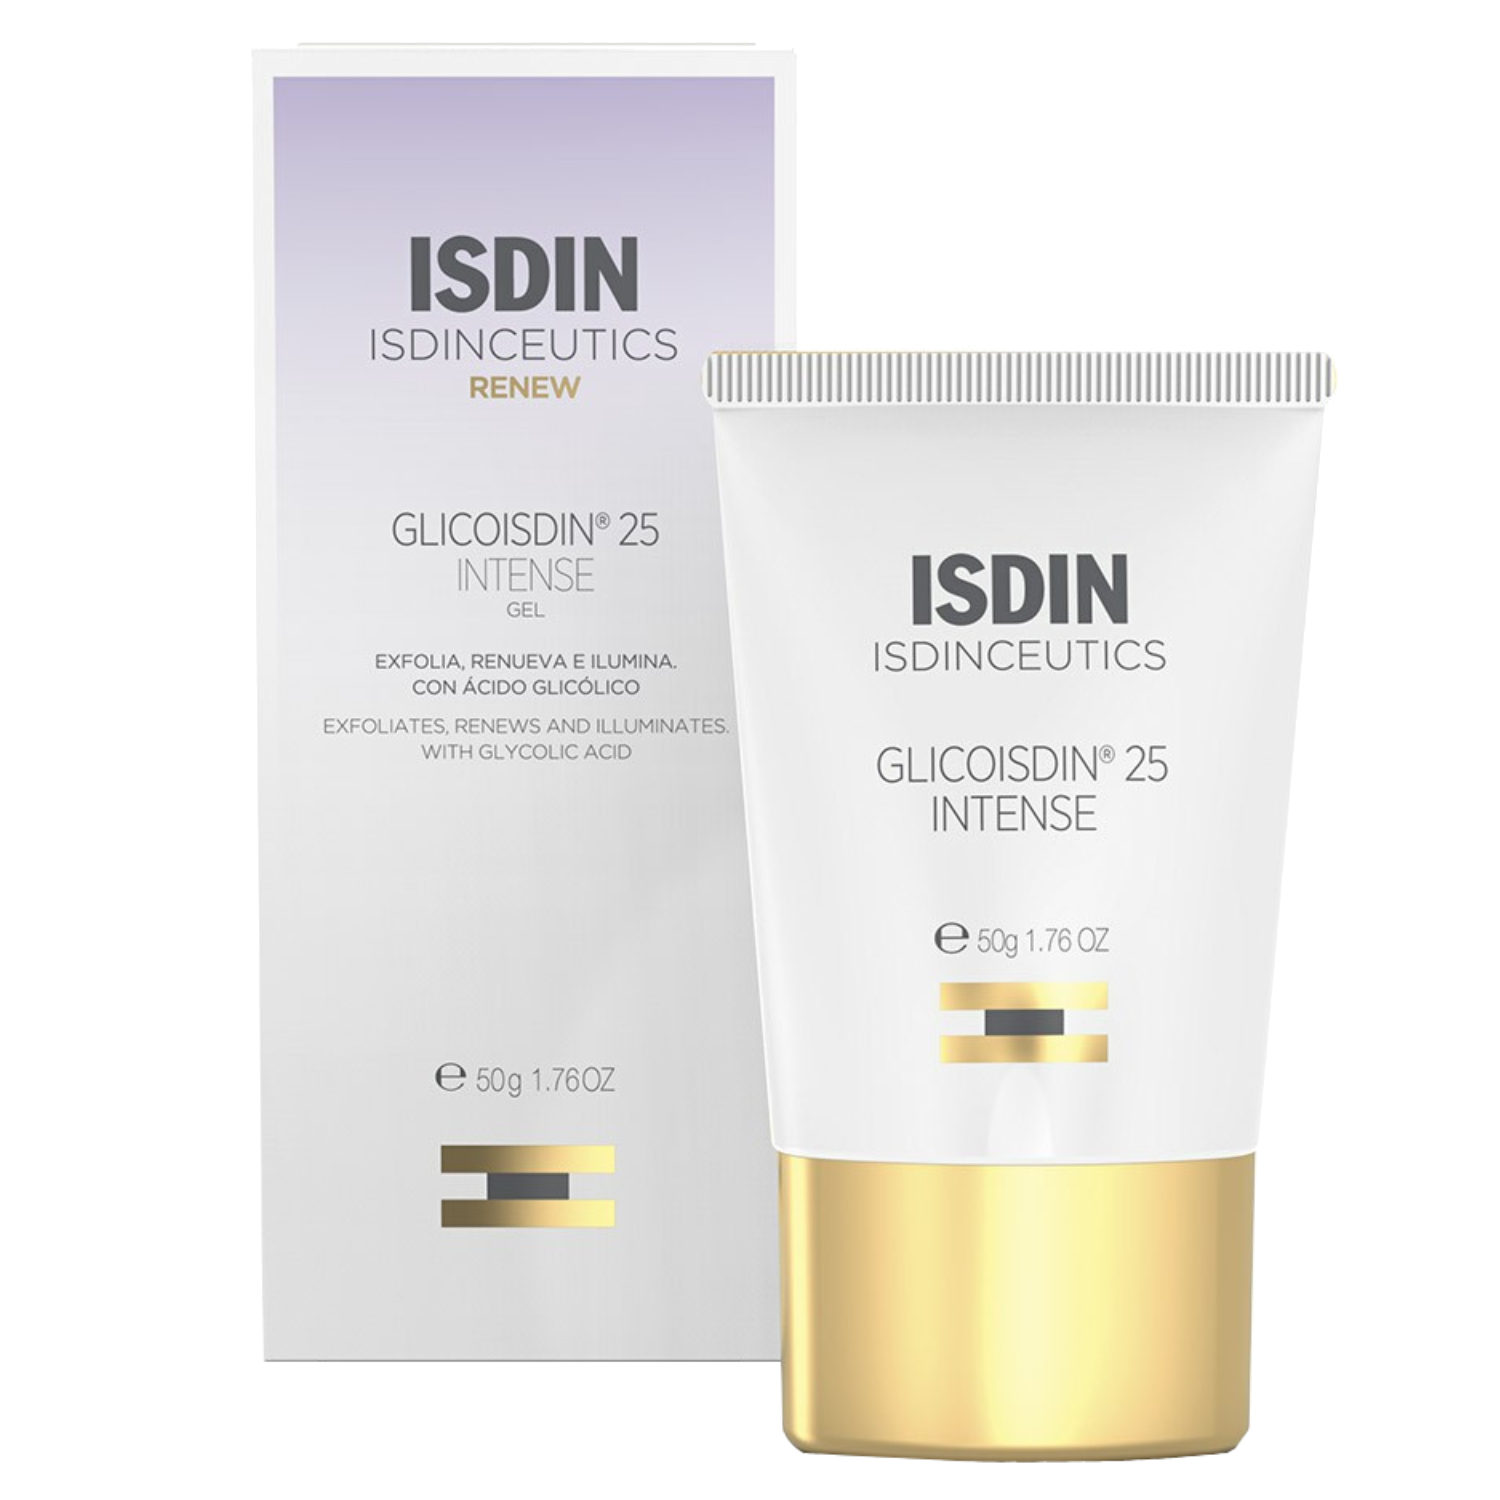 Product Image for Isdinceutics Glicoisidin 25 Intense Gel Facial 50g